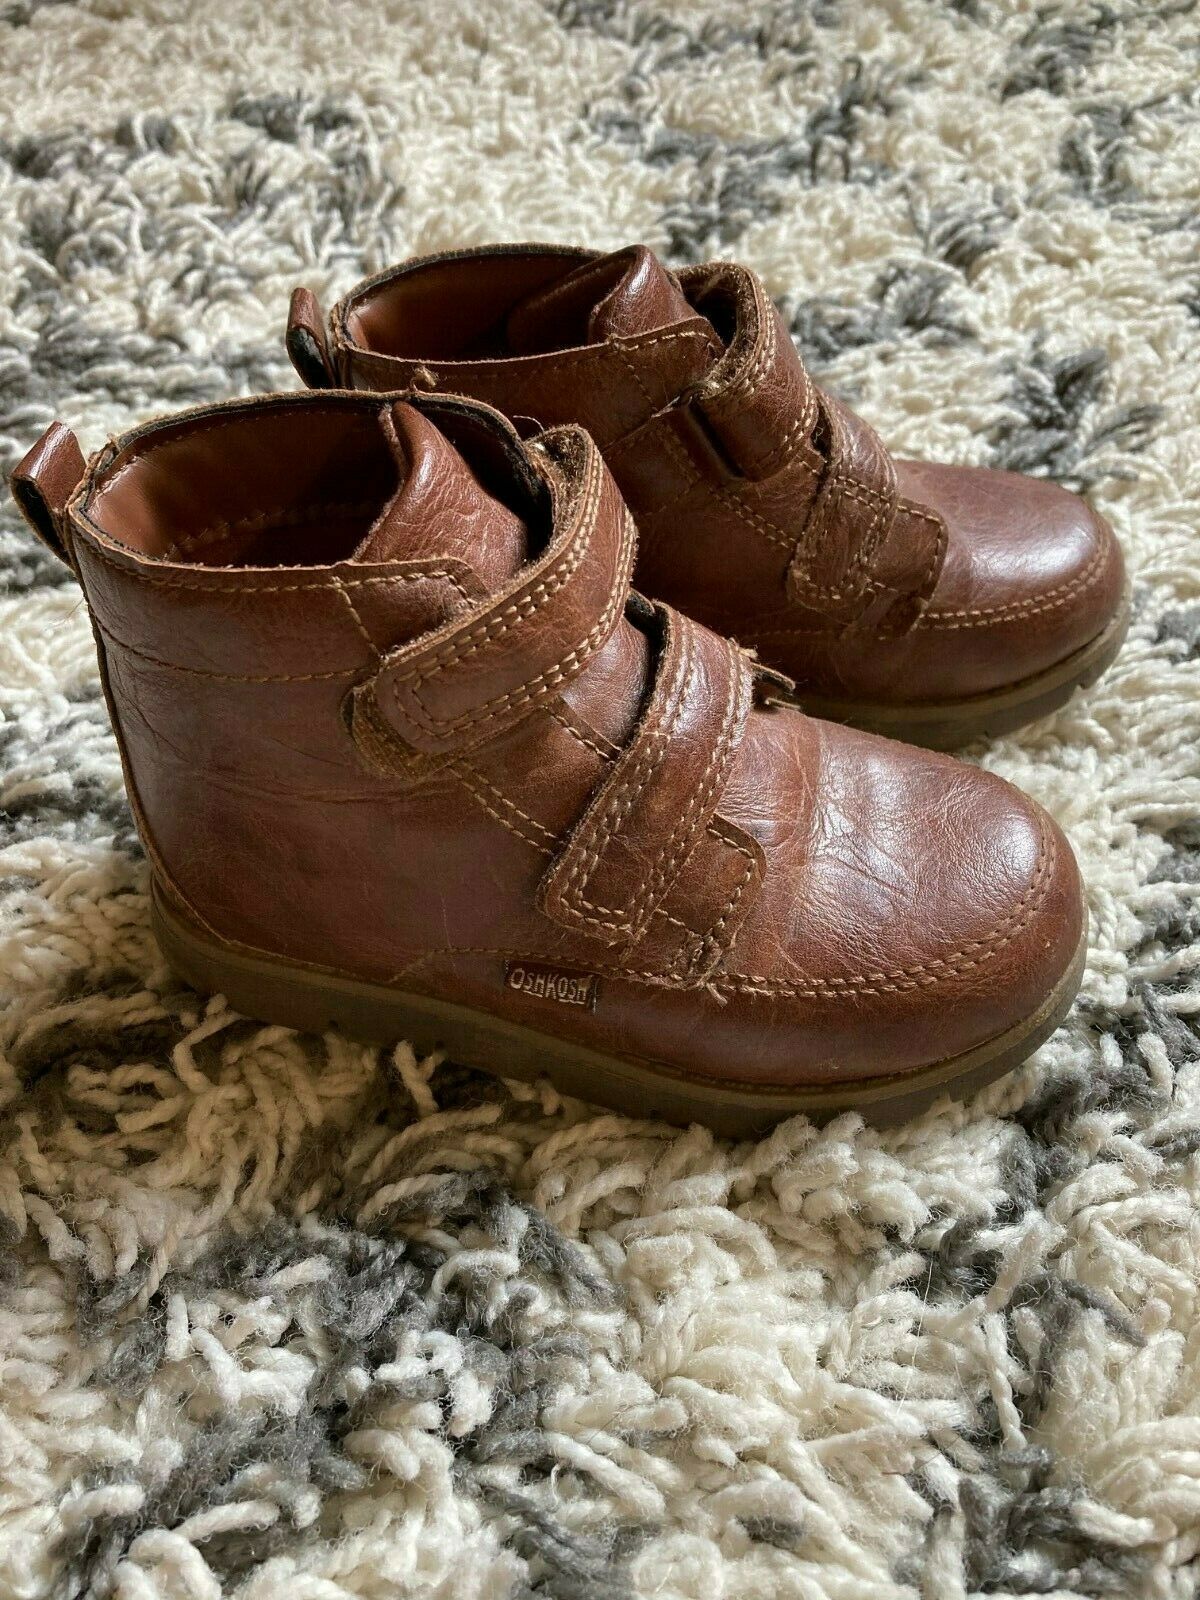 OSHKOSH Boys Kids Toddler Brown Leather Dress Shoes Size 8